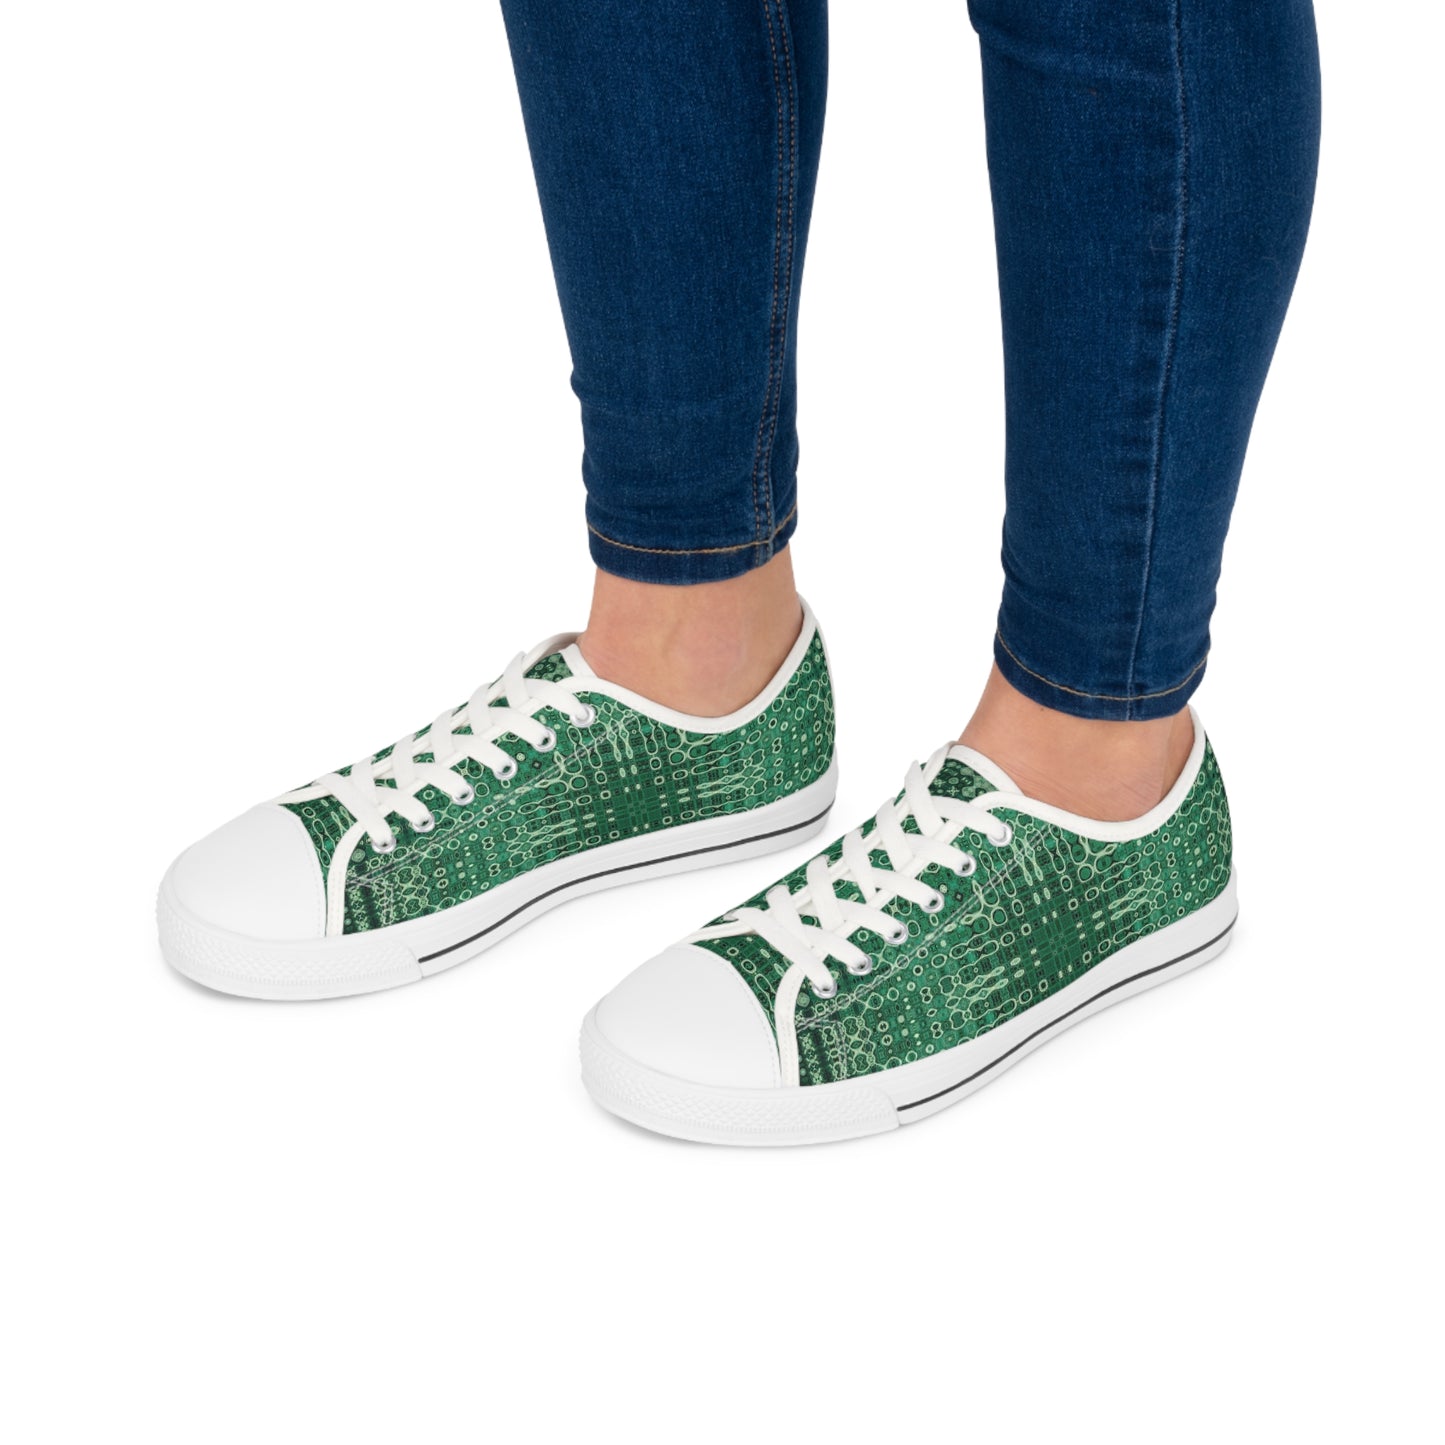 "Looped Circuits - Green" JoySneaks Women's Low Top Sneakers